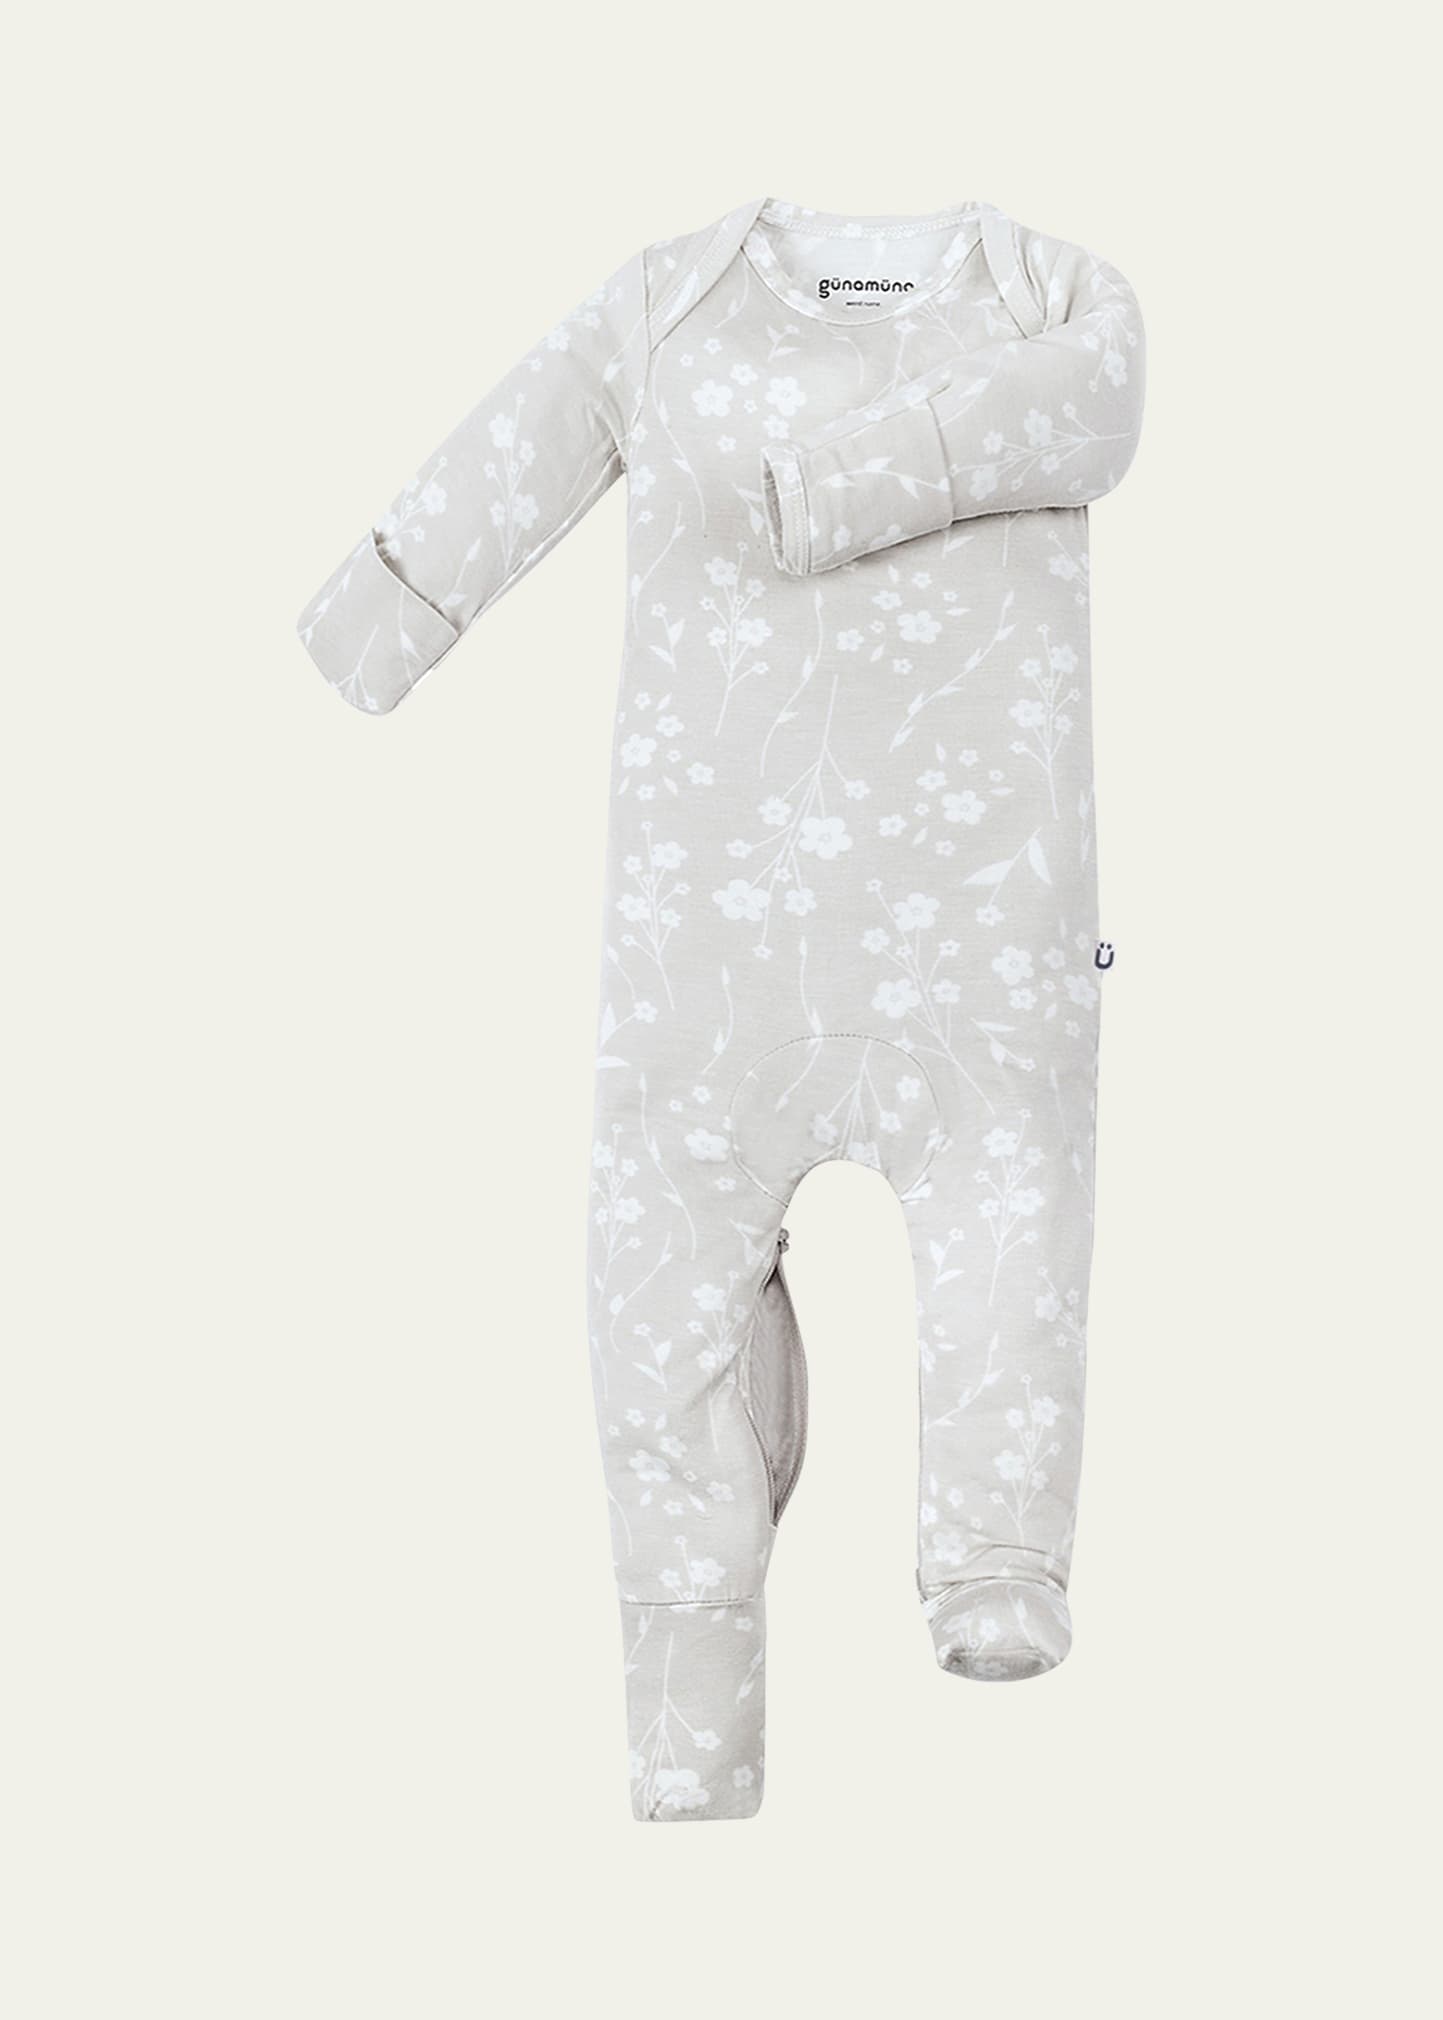 Kid's Convertible Footie Pajamas, Size Newborn-24M